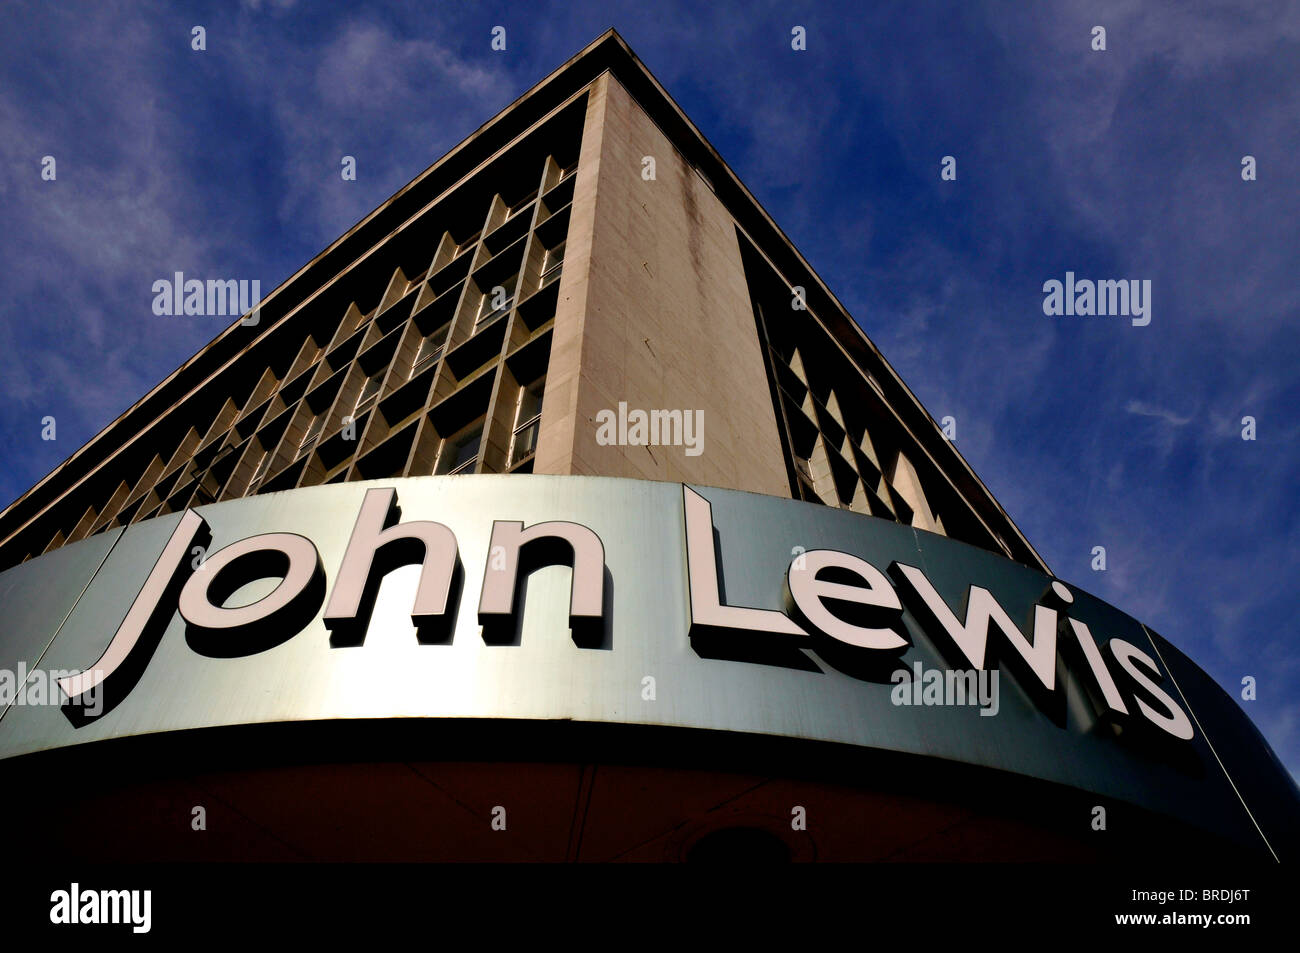 John Lewis Department Store in Oxford Street, London, England, UK Stockfoto